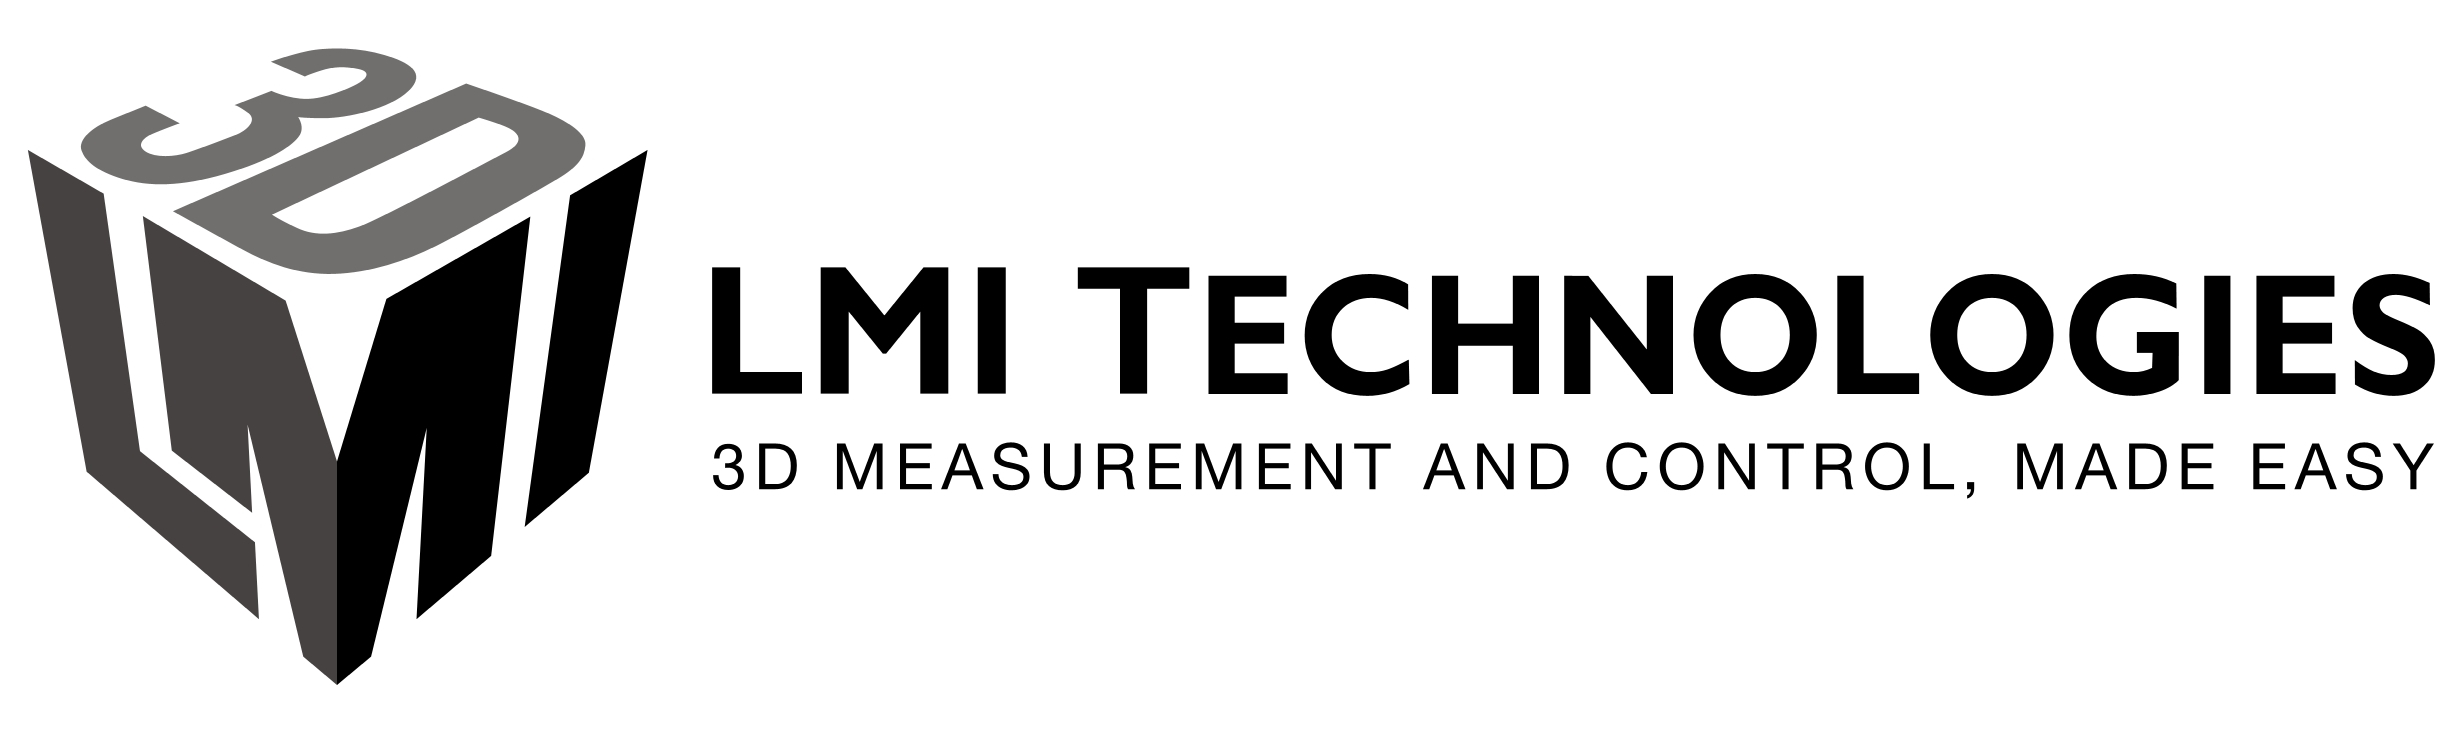 LMI TECHNOLOGIES 3D Logo